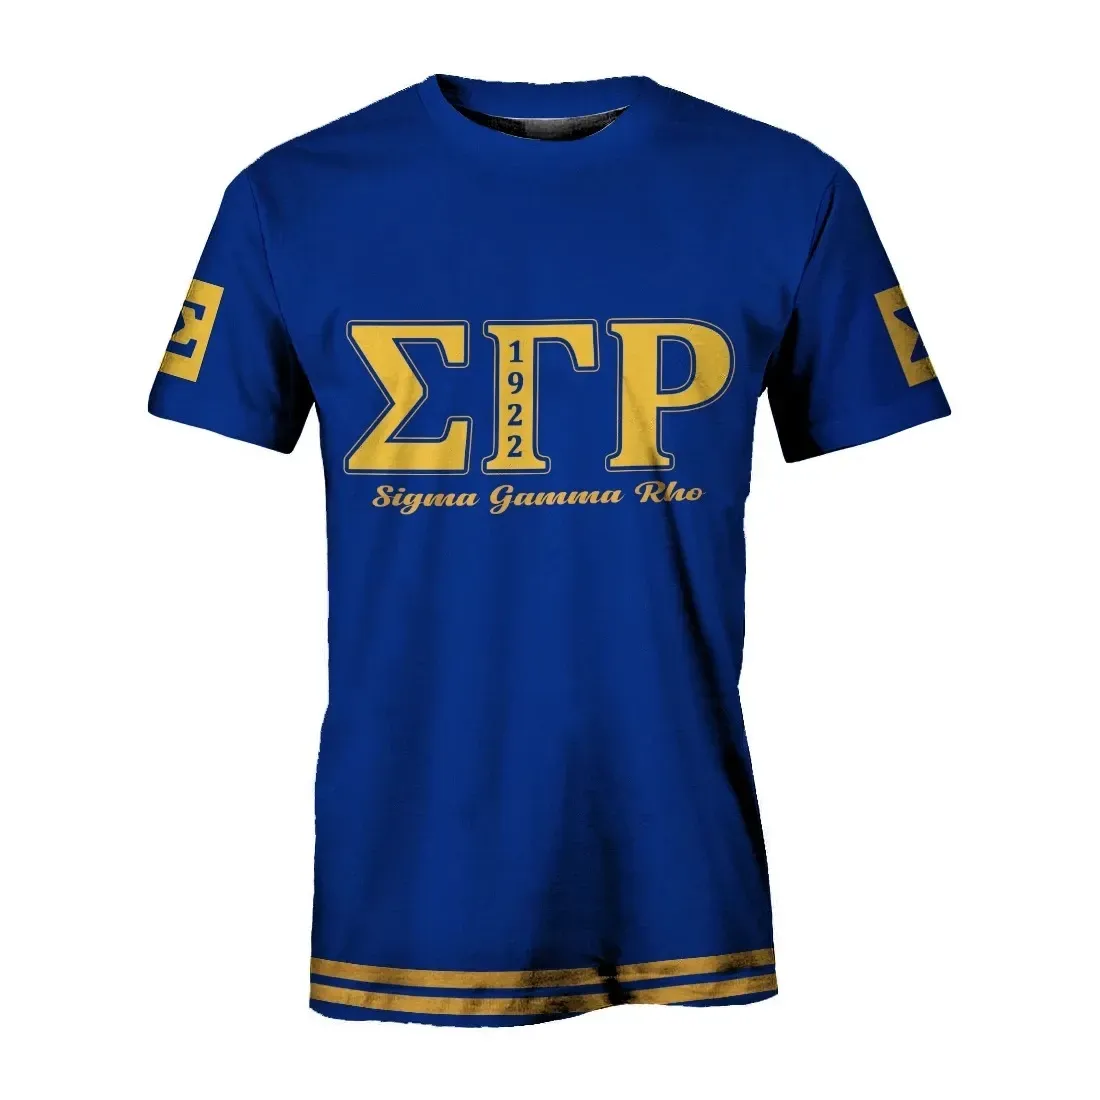 T-shirt – Zeta Phi Beta HBCU Graduation Tee